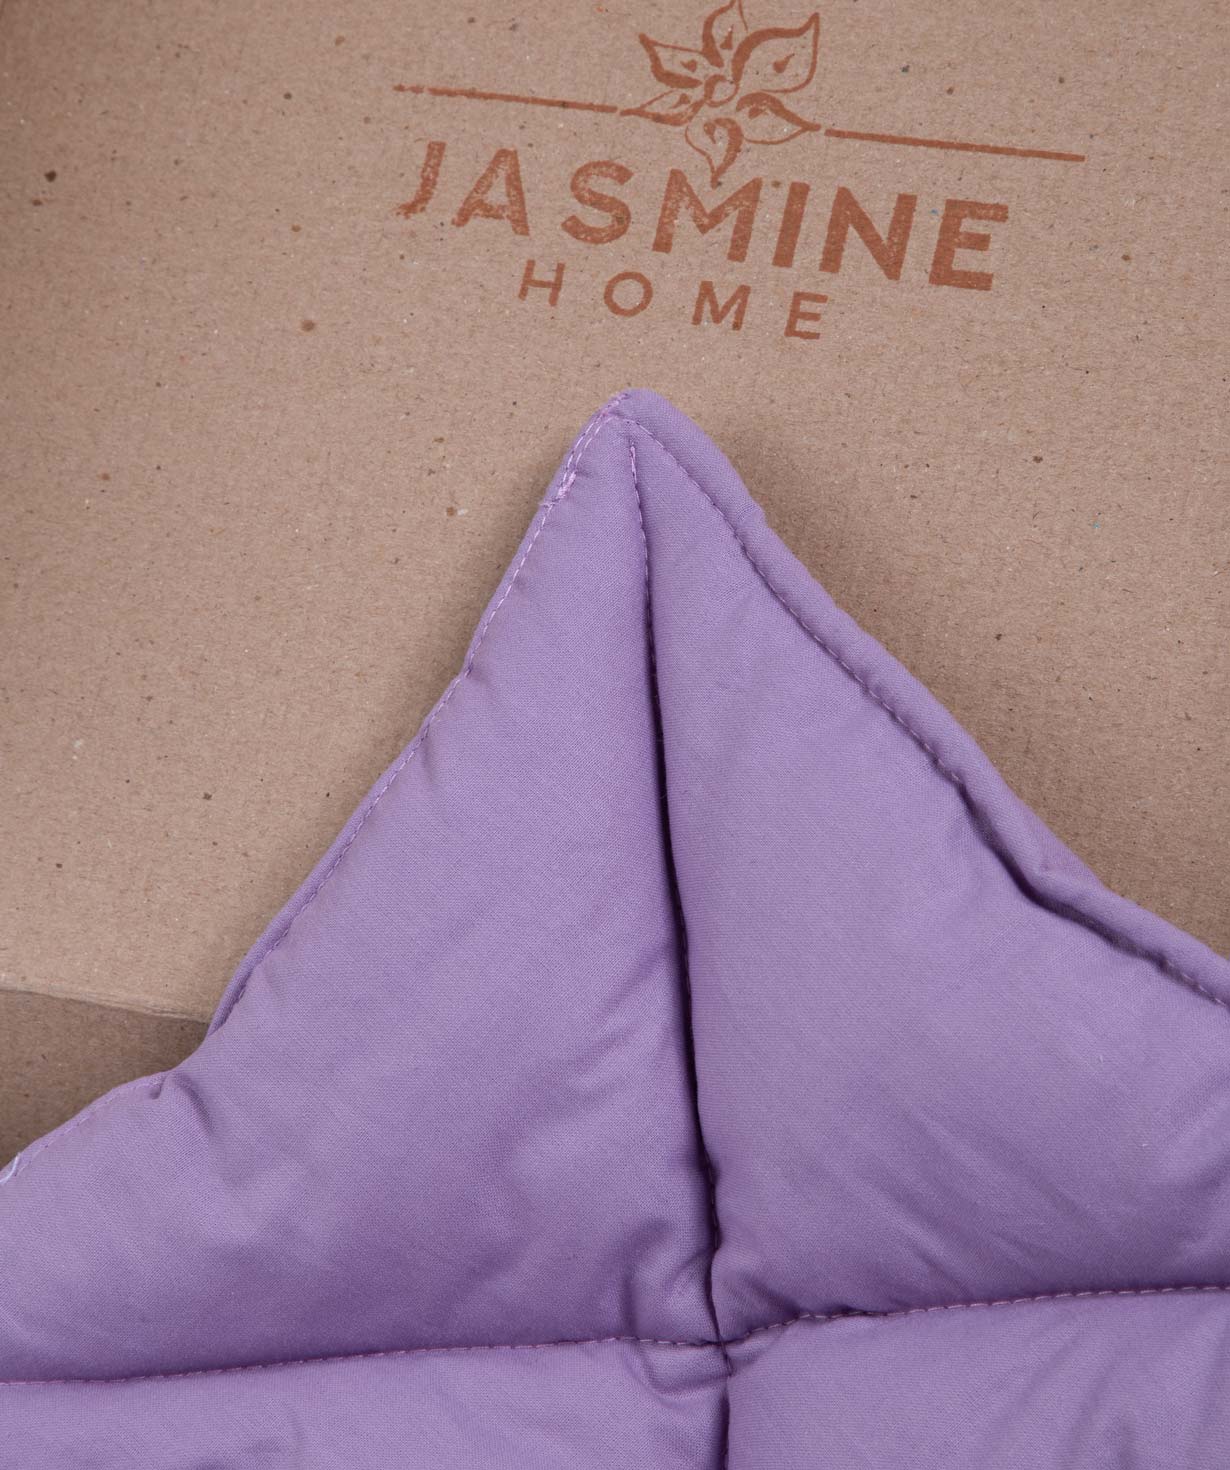 Набор для кухни «Jasmine Home» Базилик №27